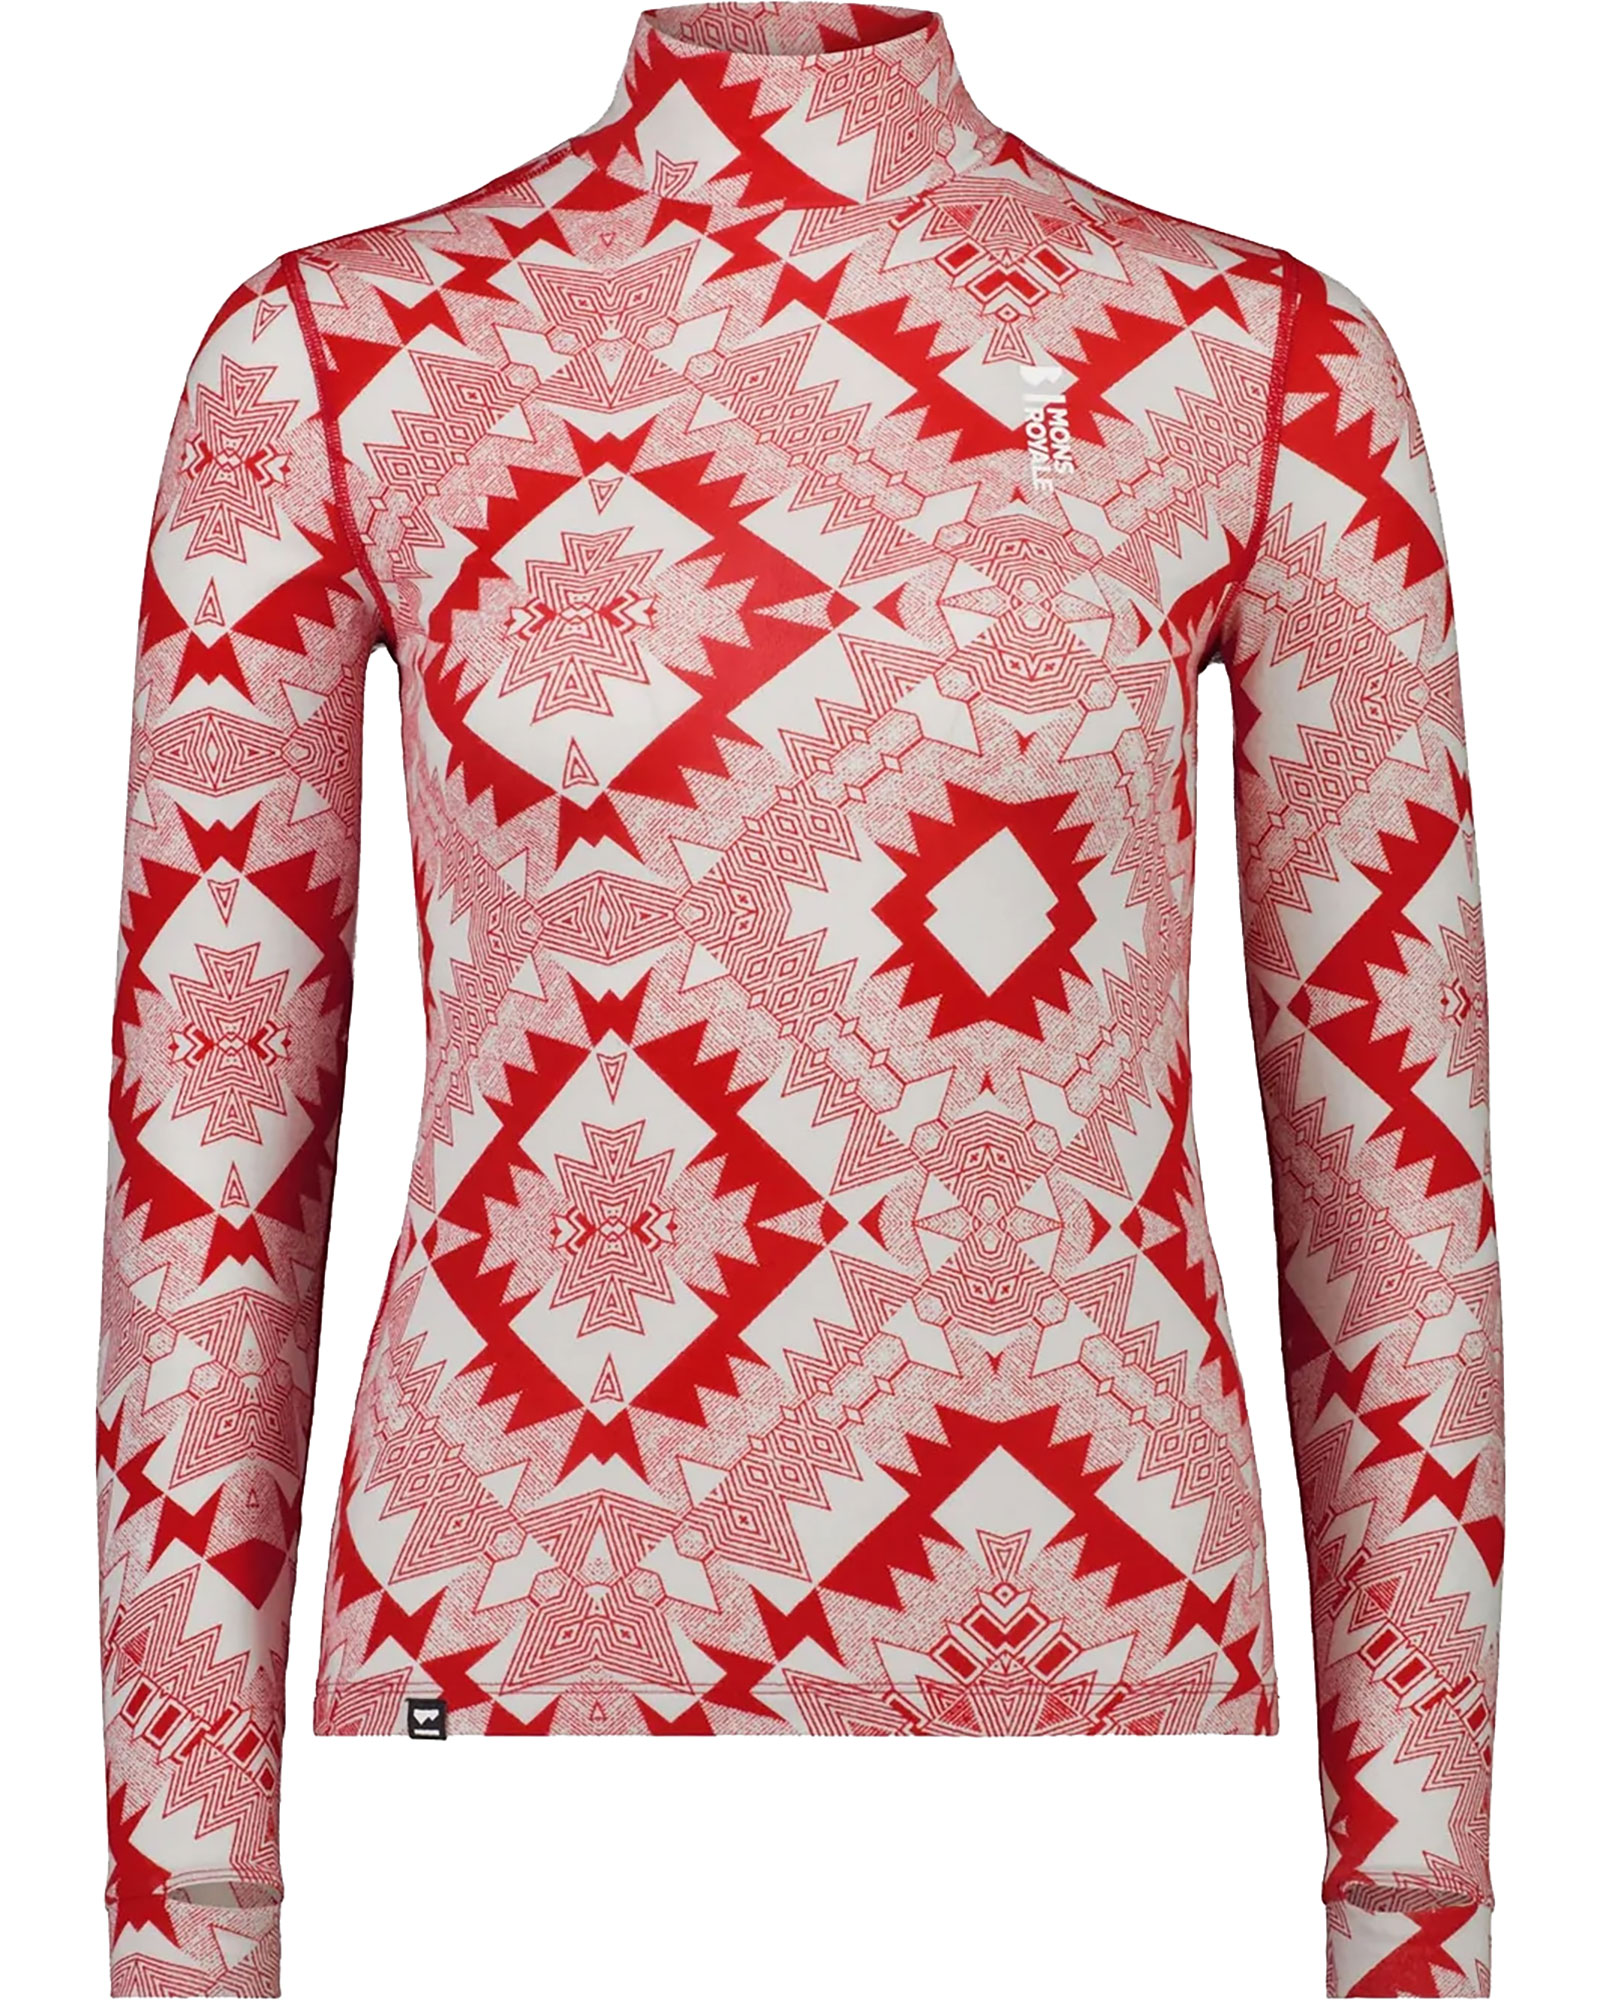 Mons Royale Cascade Merino Flex 200 Mock Neck Women’s Long Sleeve T Shirt - Retro Red Nordtek S